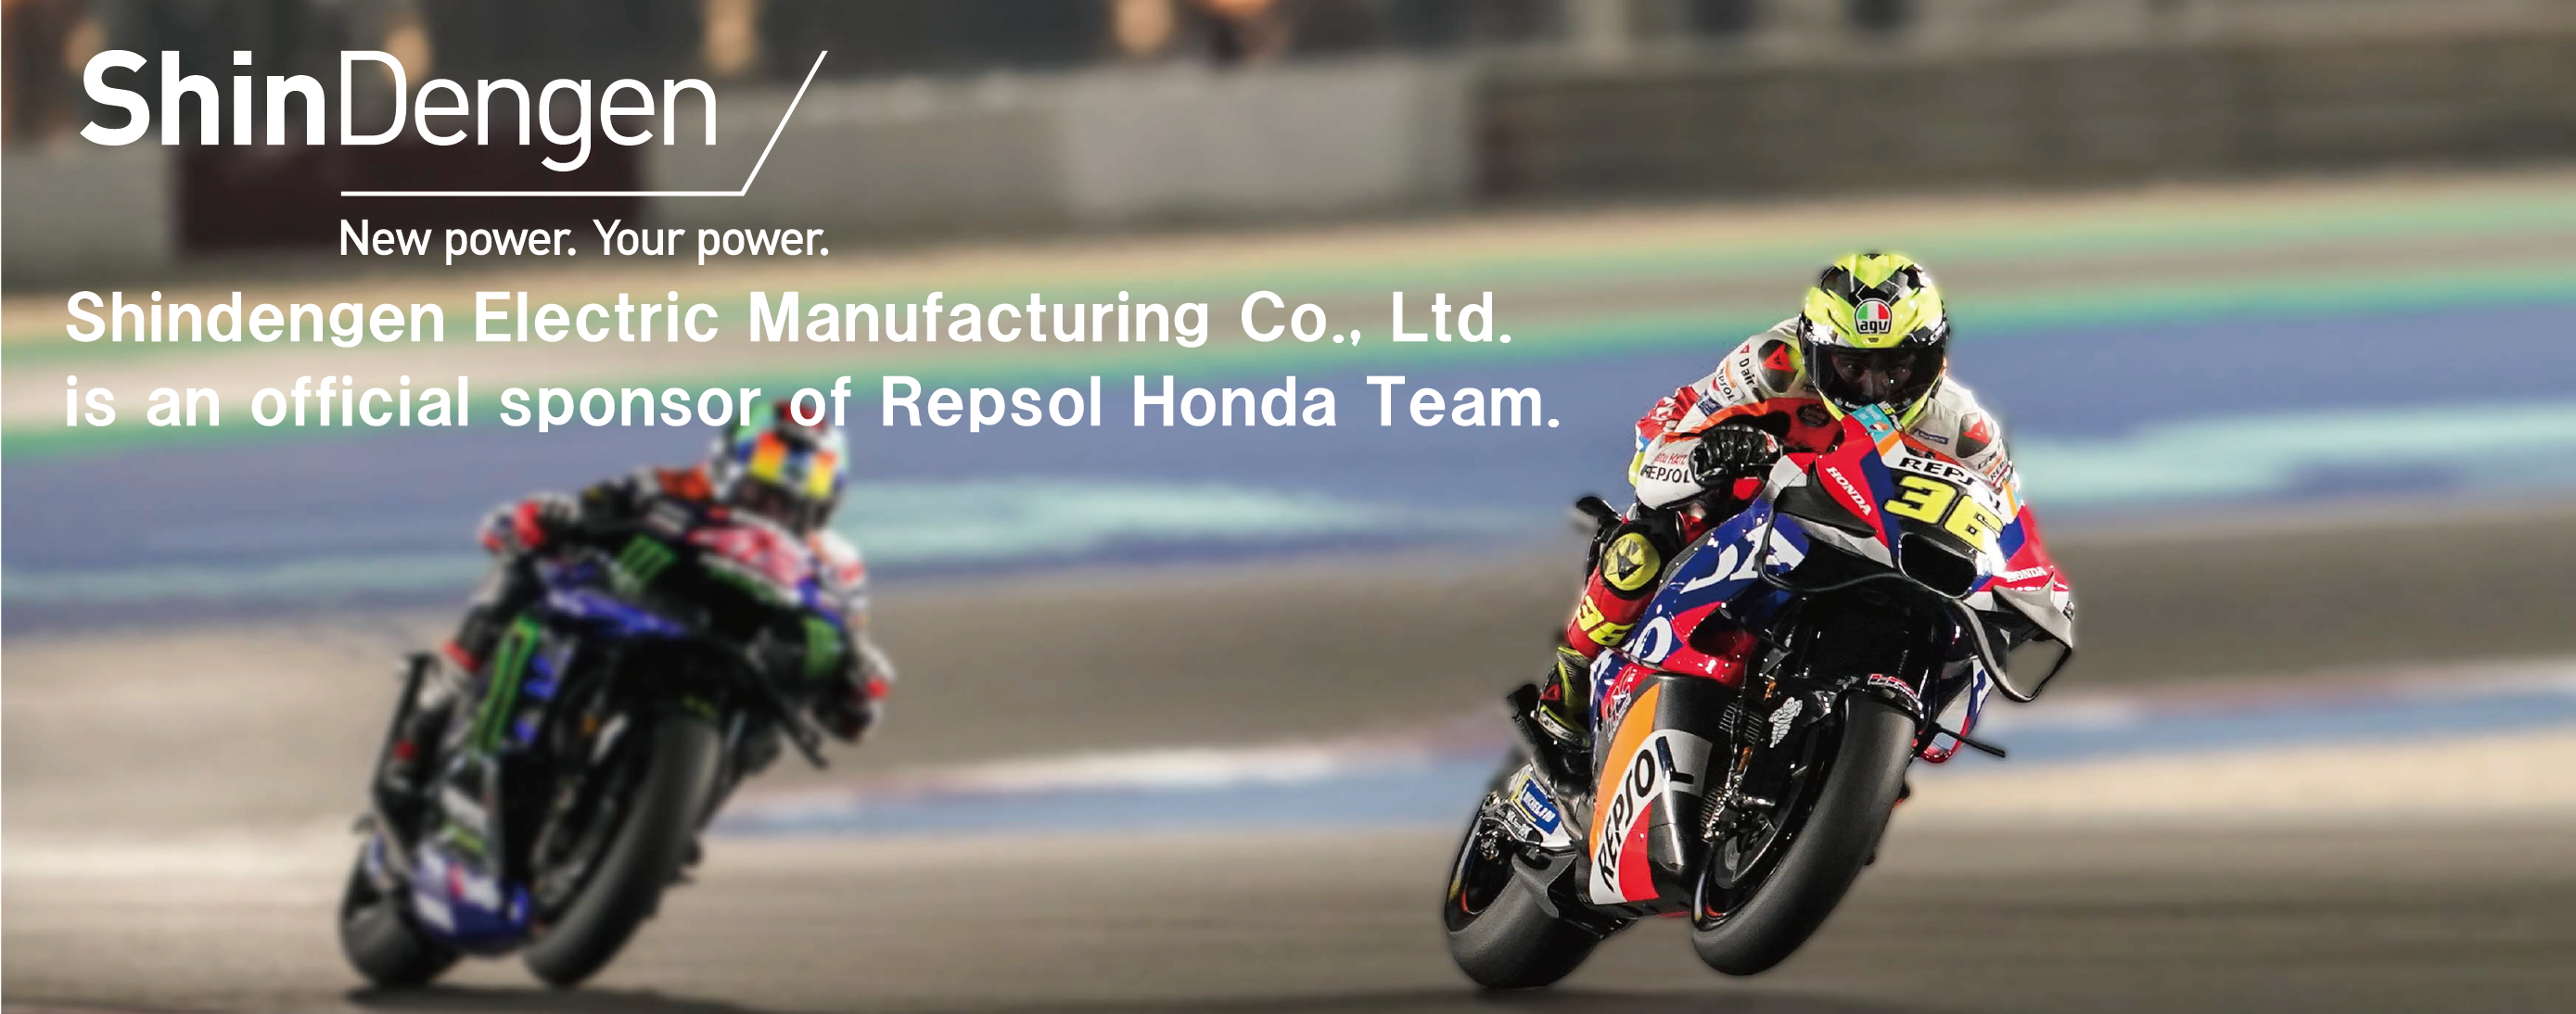 Shindengen Electric Mfg, Co., Ltd. is an official sponsor of Repsol Honda Team.